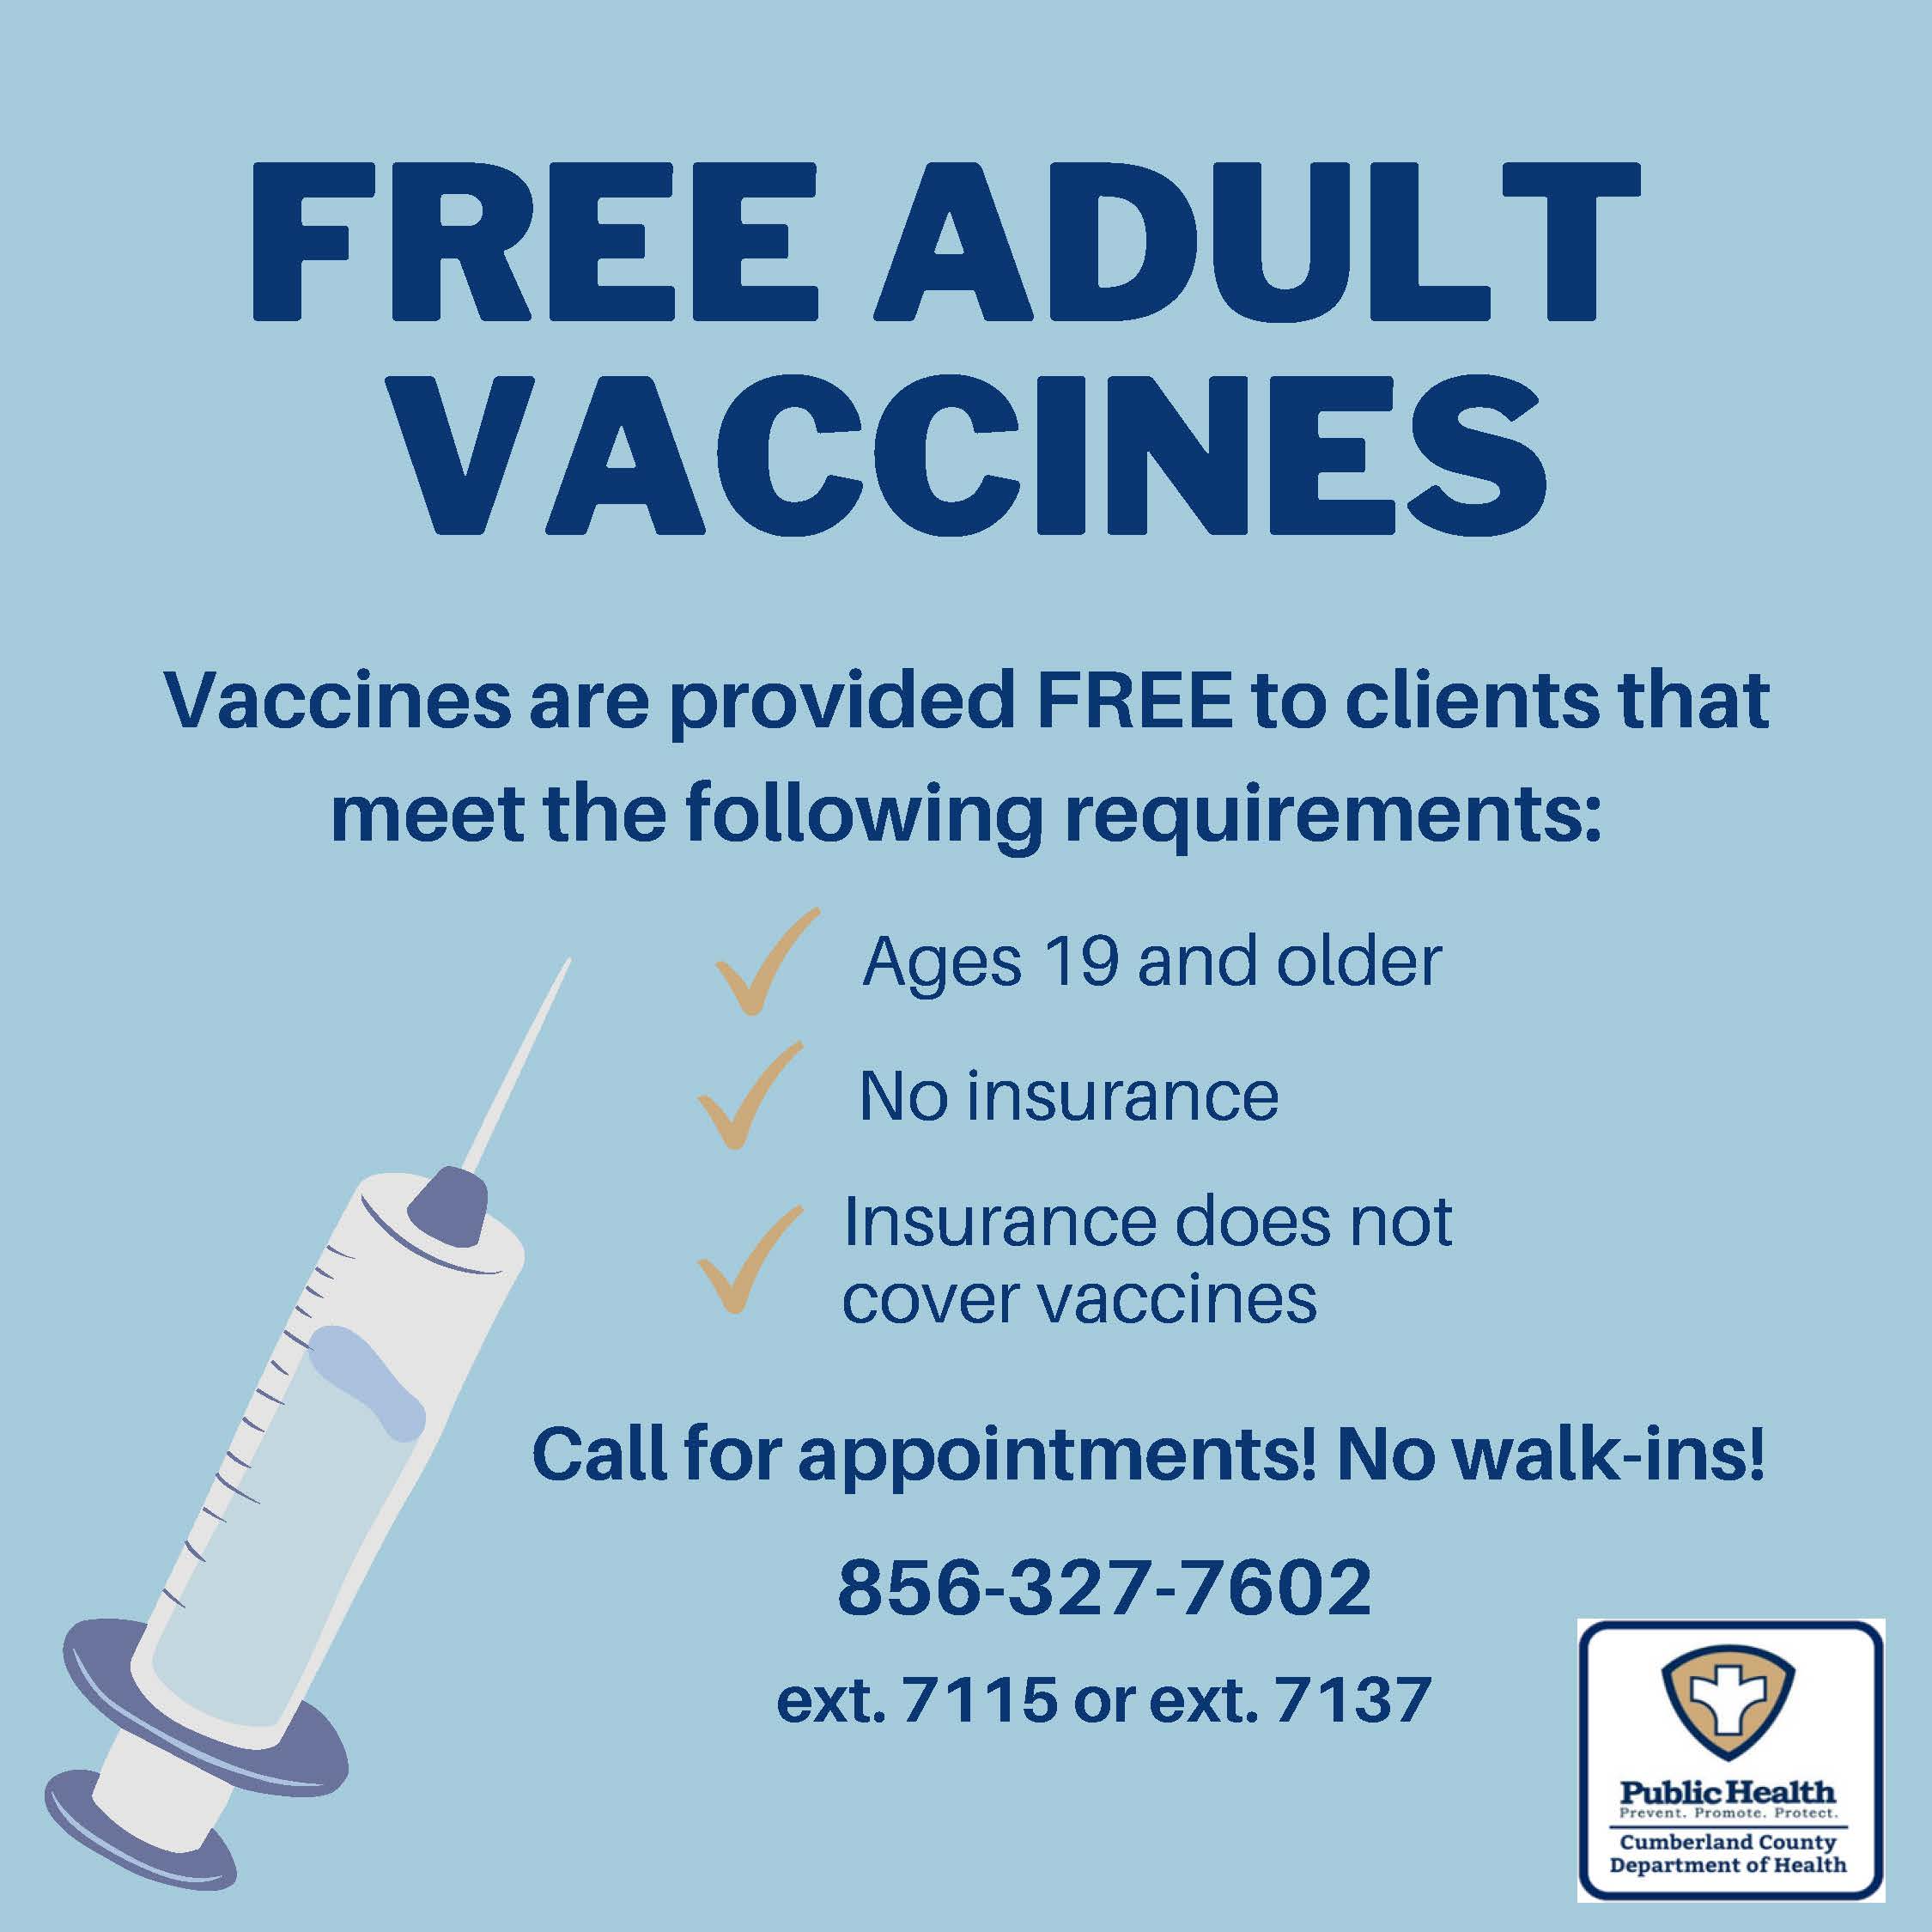 adult vaccines